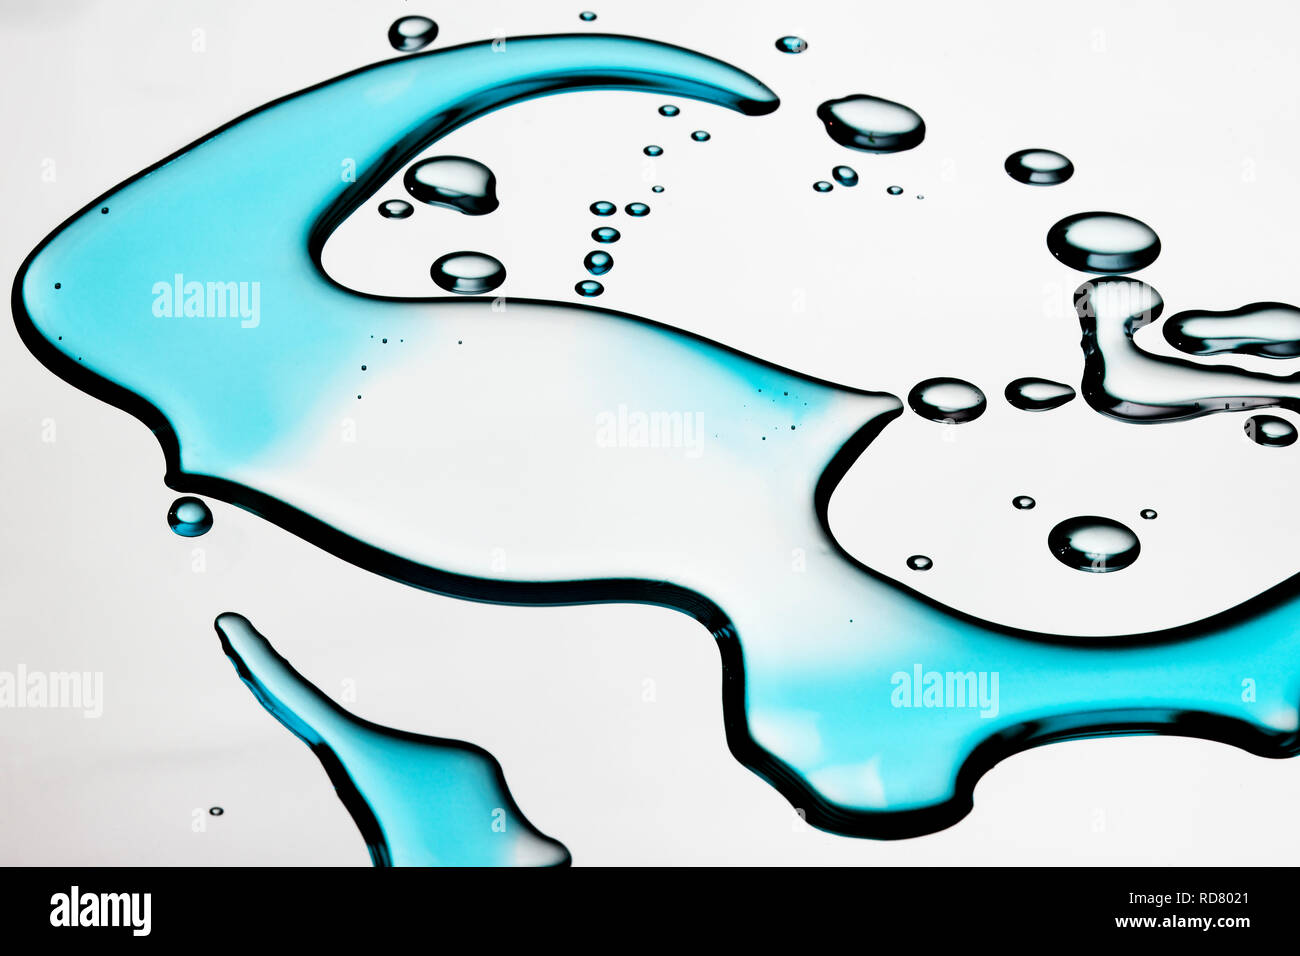 Close up image of spilled blue liquid on white background Stock Photo